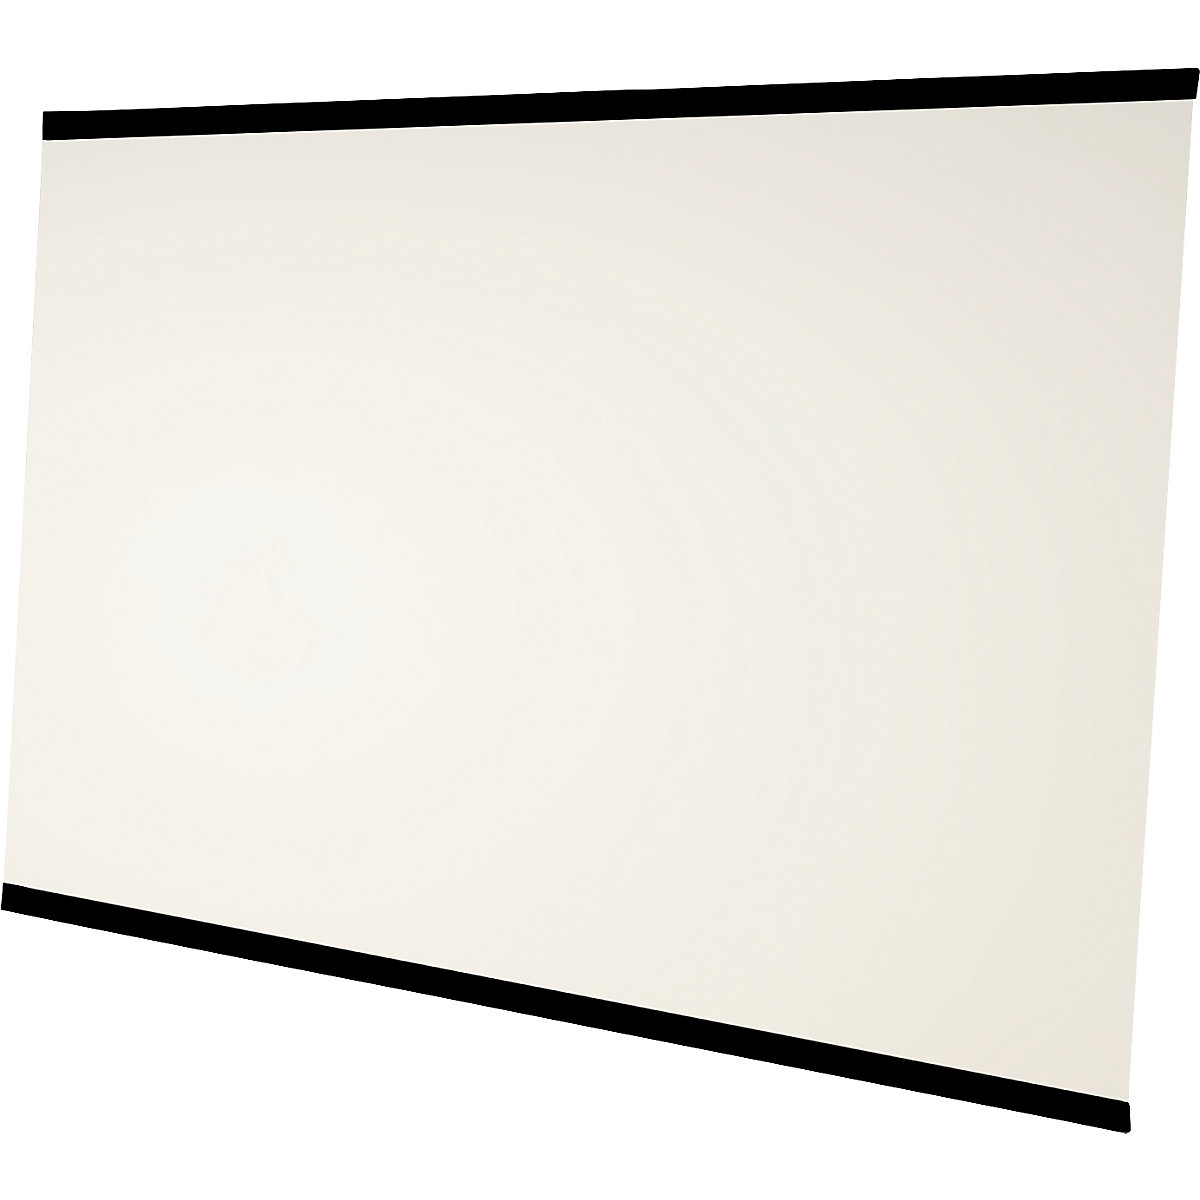 Lavagna bianca senza cornice LEAN WALL – Chameleon, smaltata, bianca, largh. x alt. 2940 x 2216 mm, 3 pannelli-7